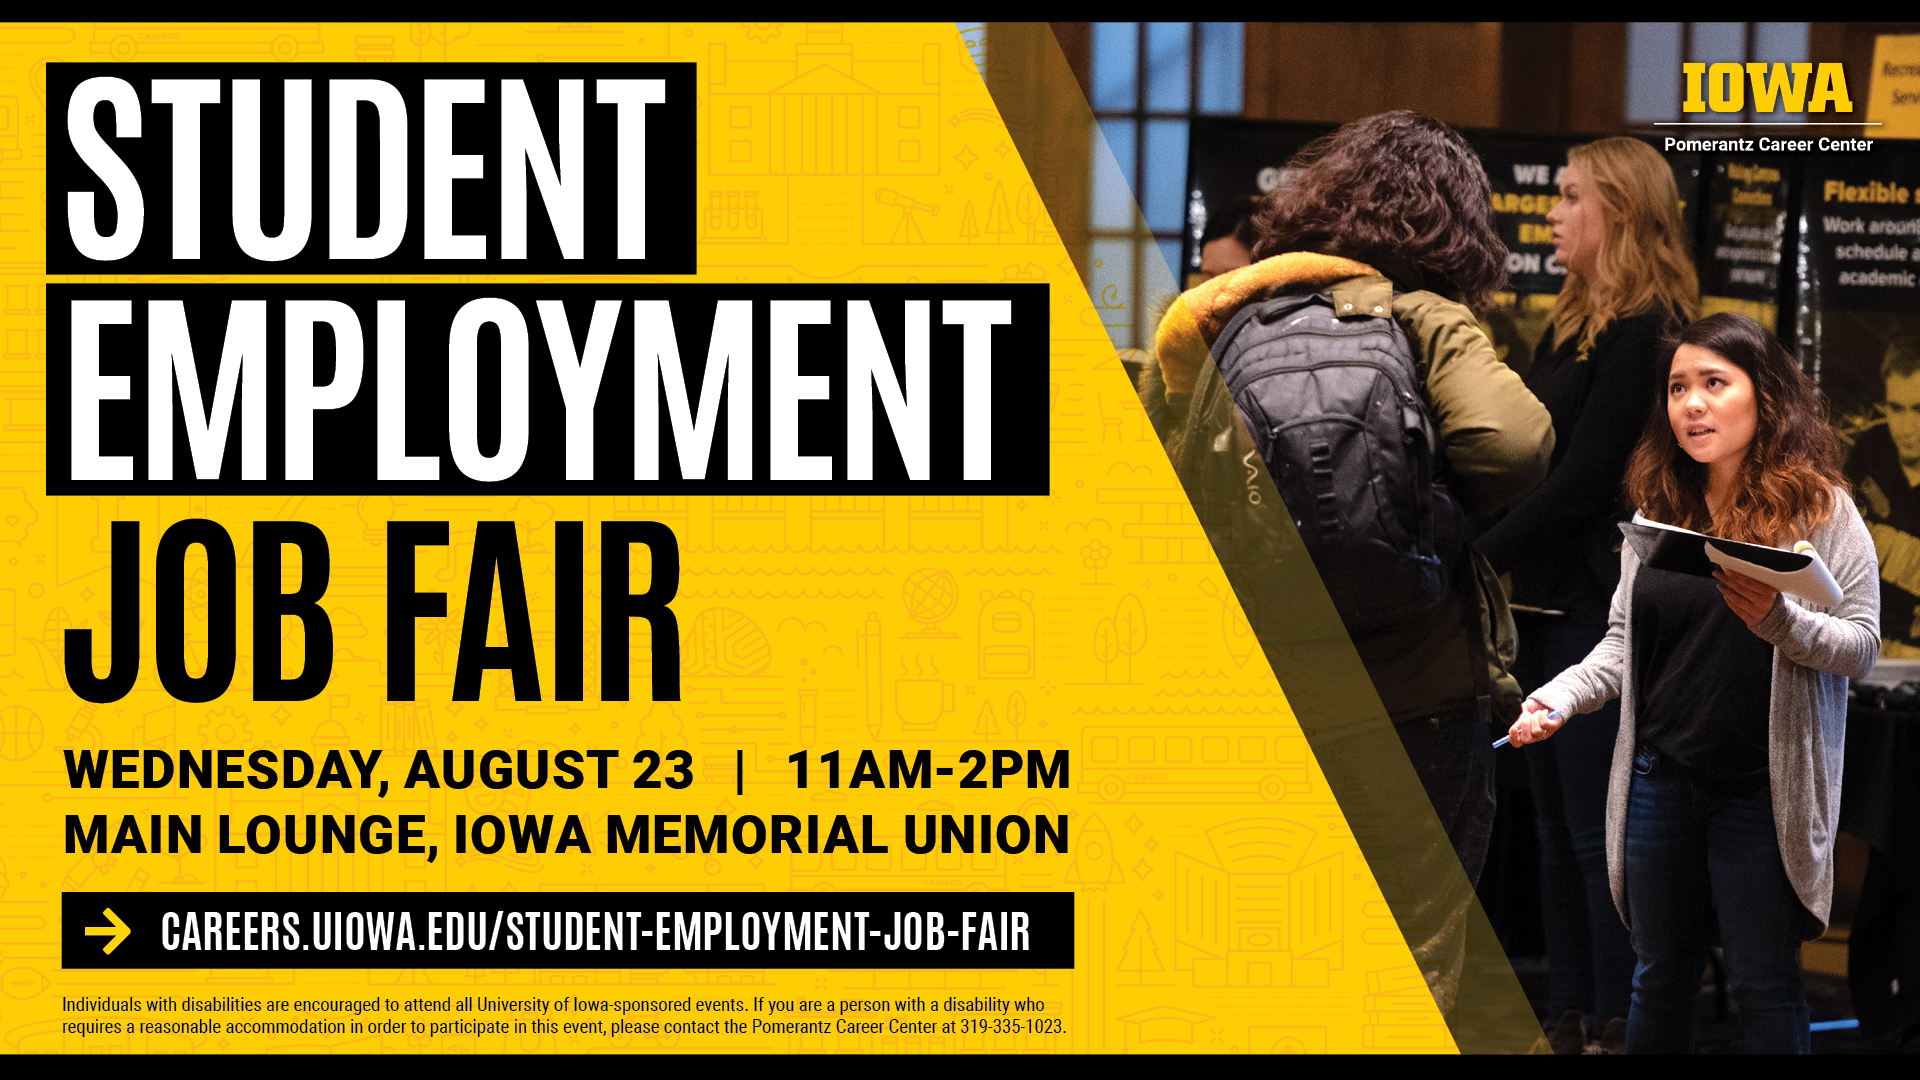 Student Employment Job Fair: Wednesday August 23, 11am-2pm, Main Lounge at Iowa Memorial Union